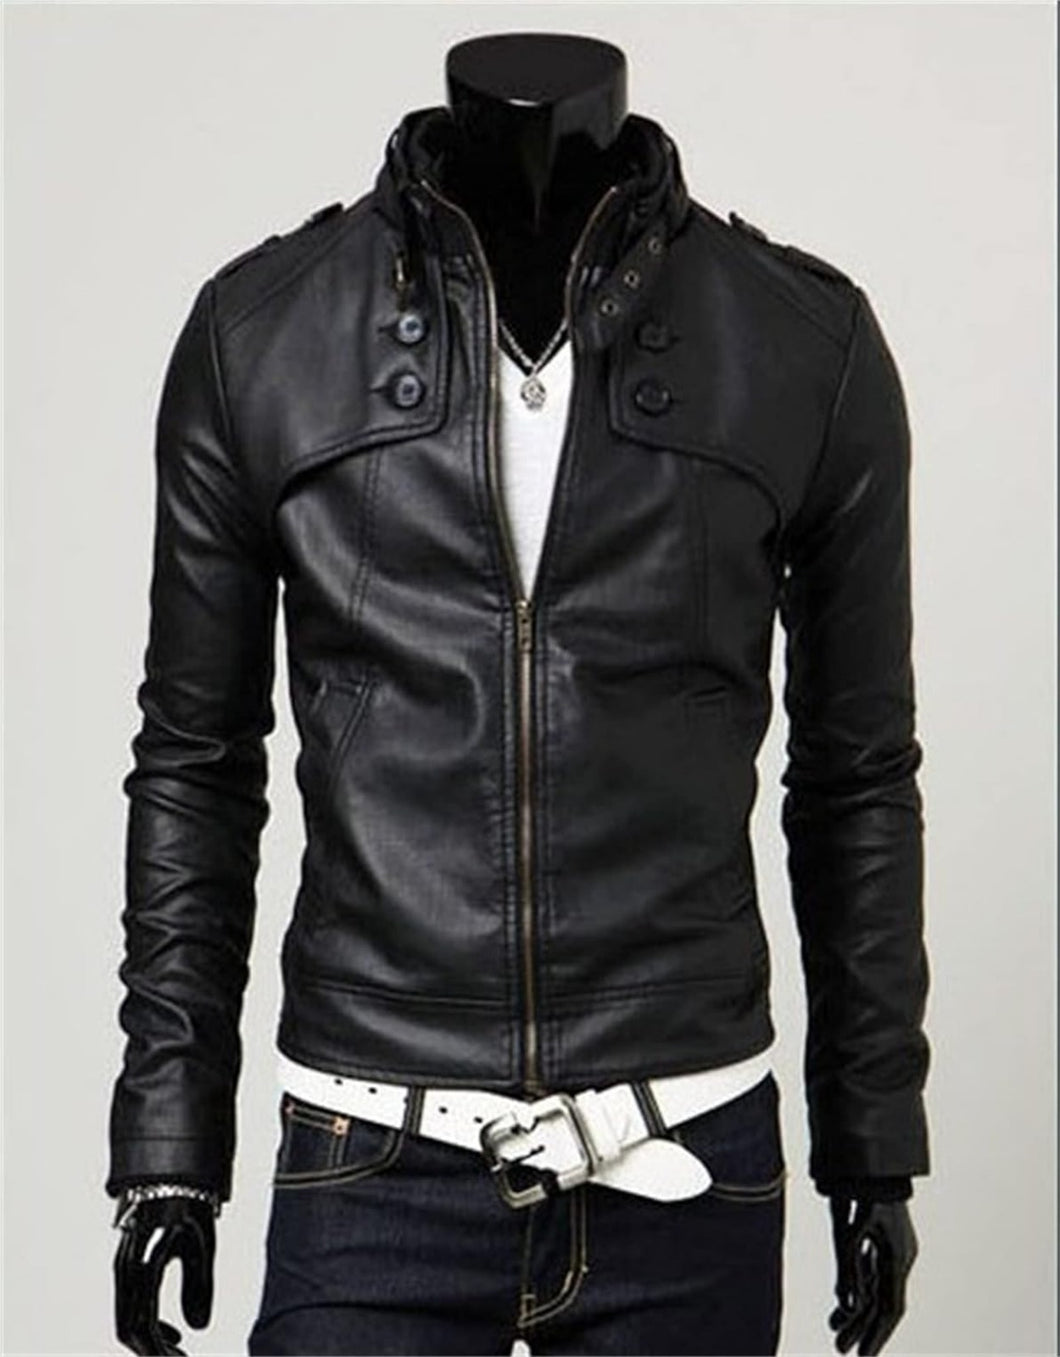 Men's Stand Collar Regular Leather Jacket